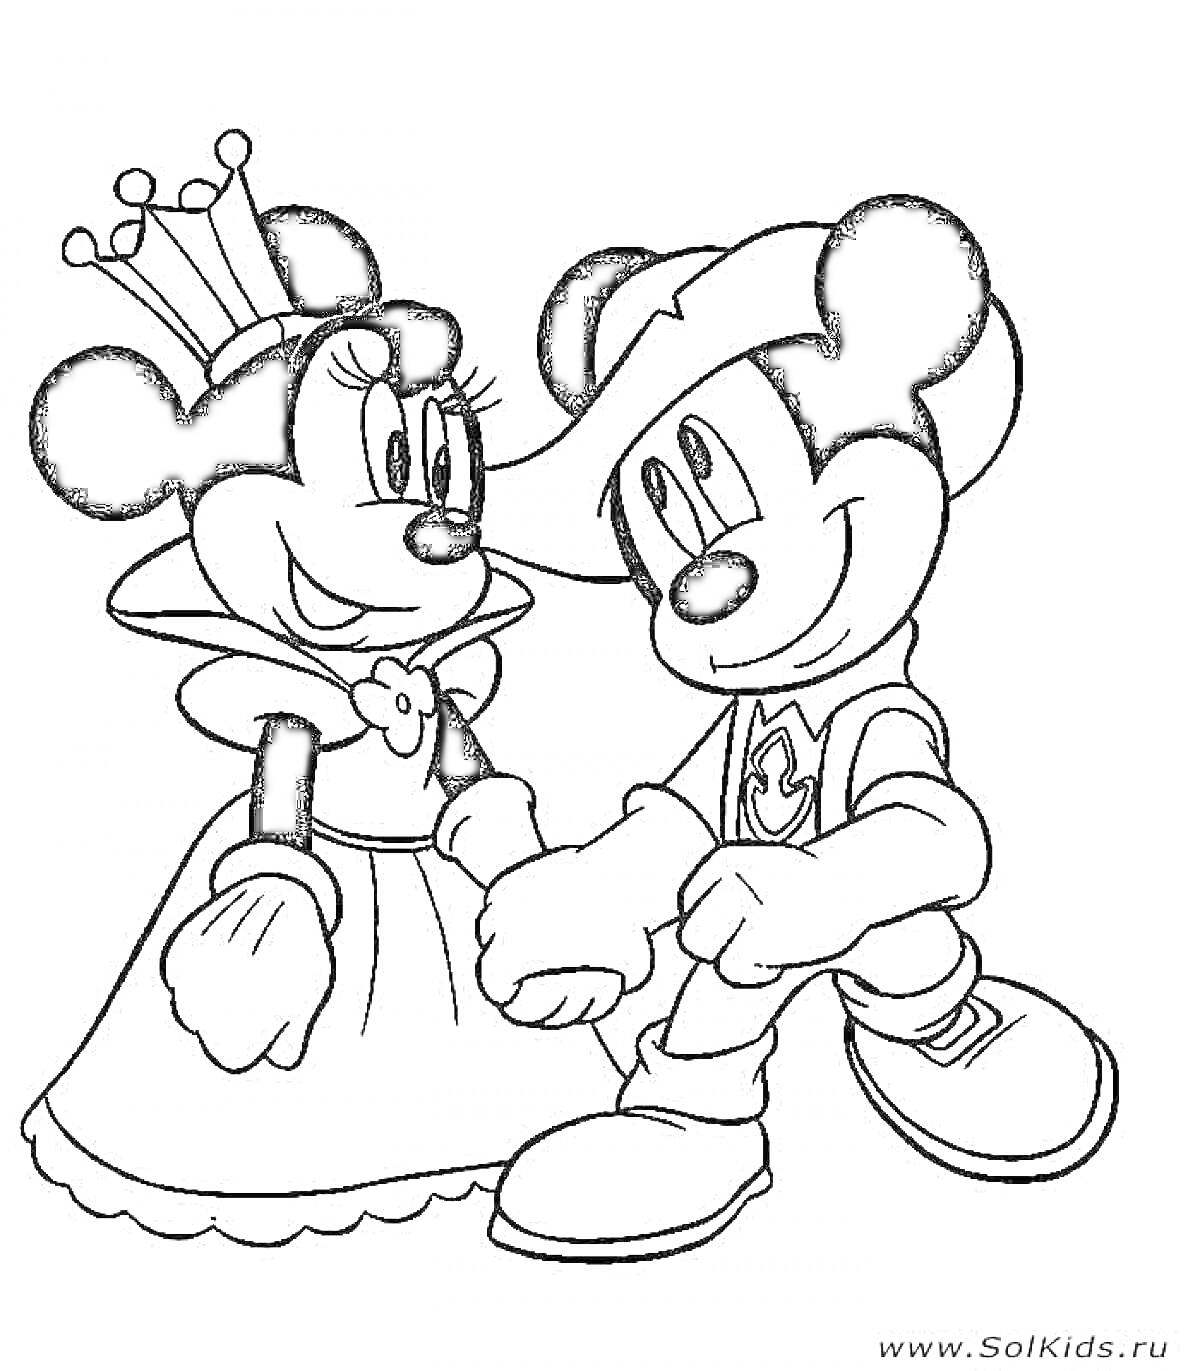 Раскраска Микки Маус и Минни Маус в костюмах принцессы и героя, держащиеся за руки